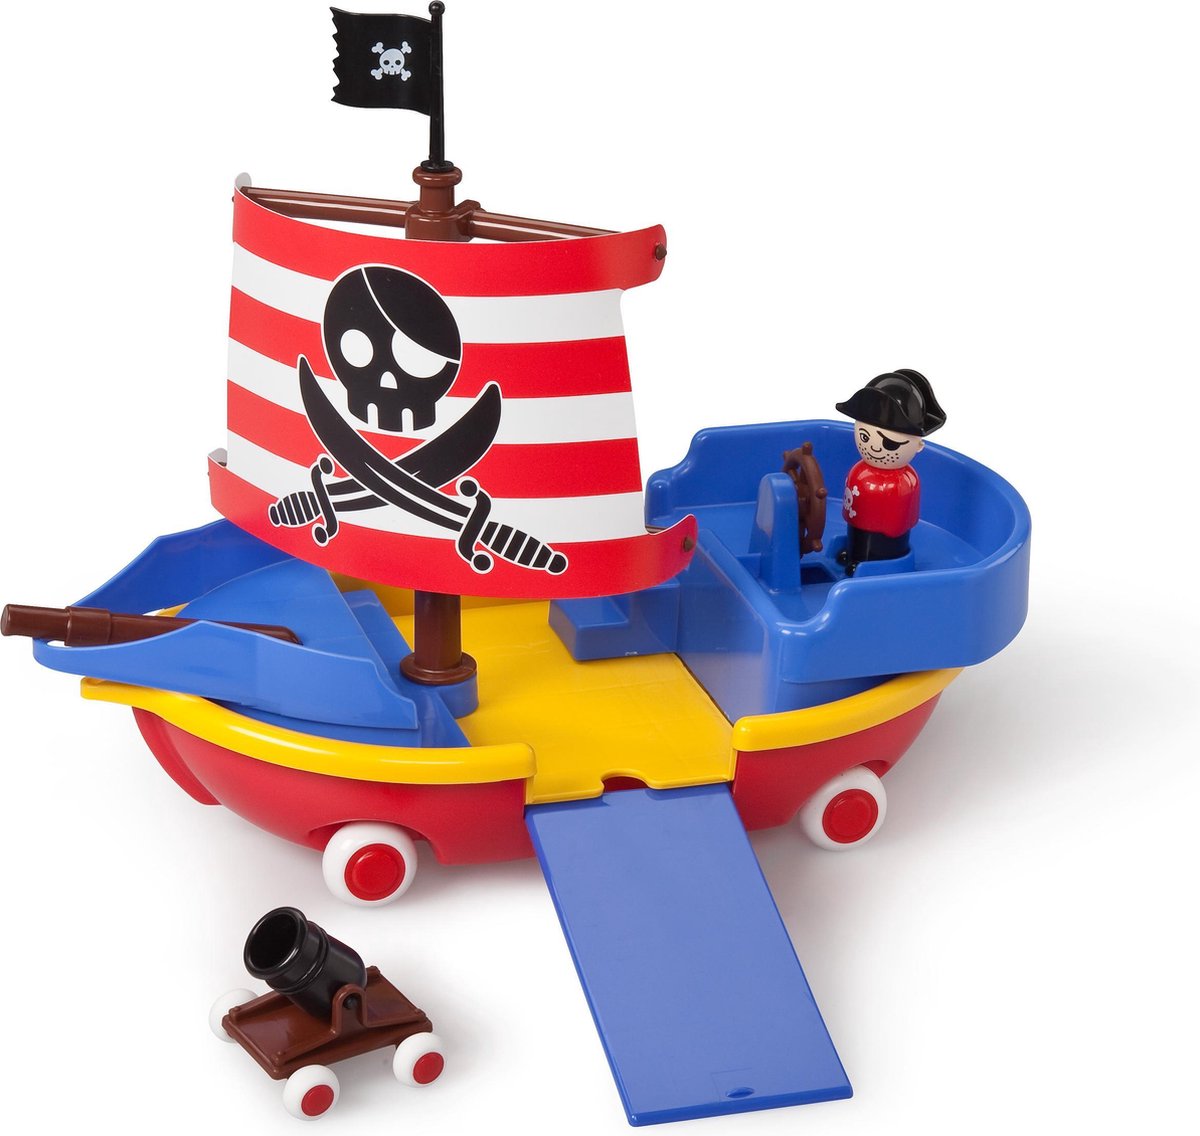 Piraten schip Viking Toys - piratenboot speelset | bol.com